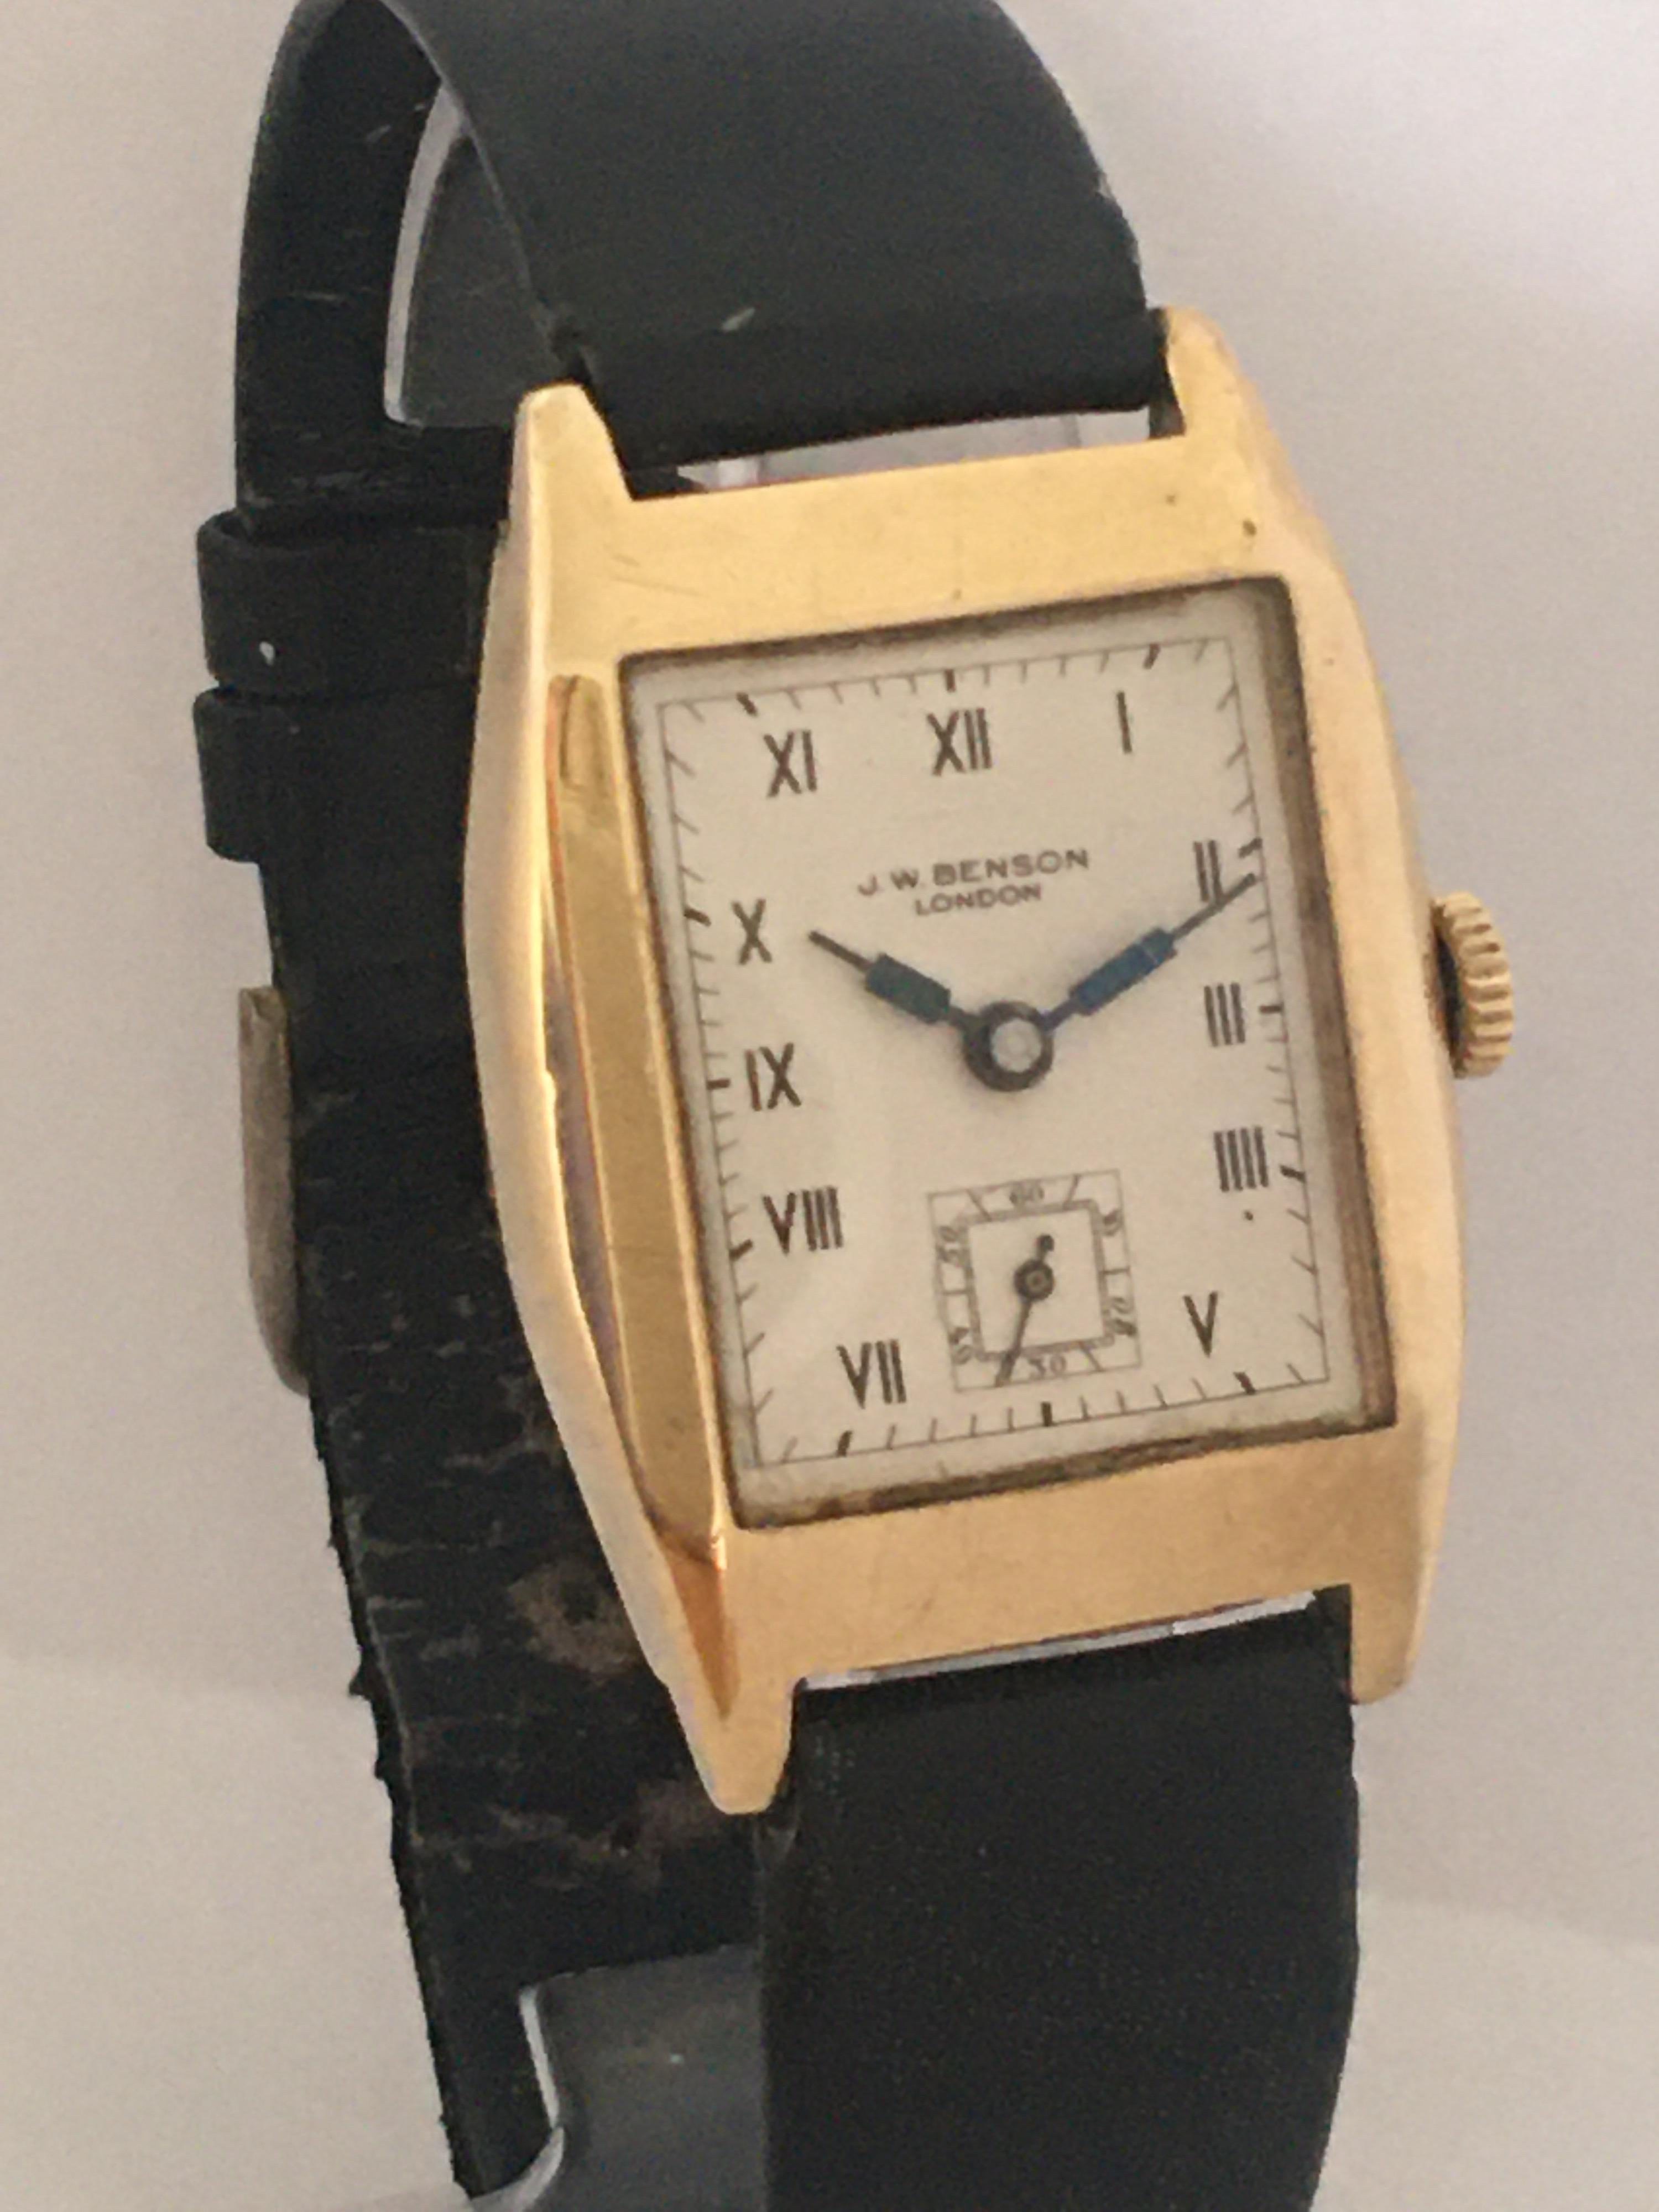 9 Karat Gold Vintage 1930s J. W. Benson London Mechanical Watch 9